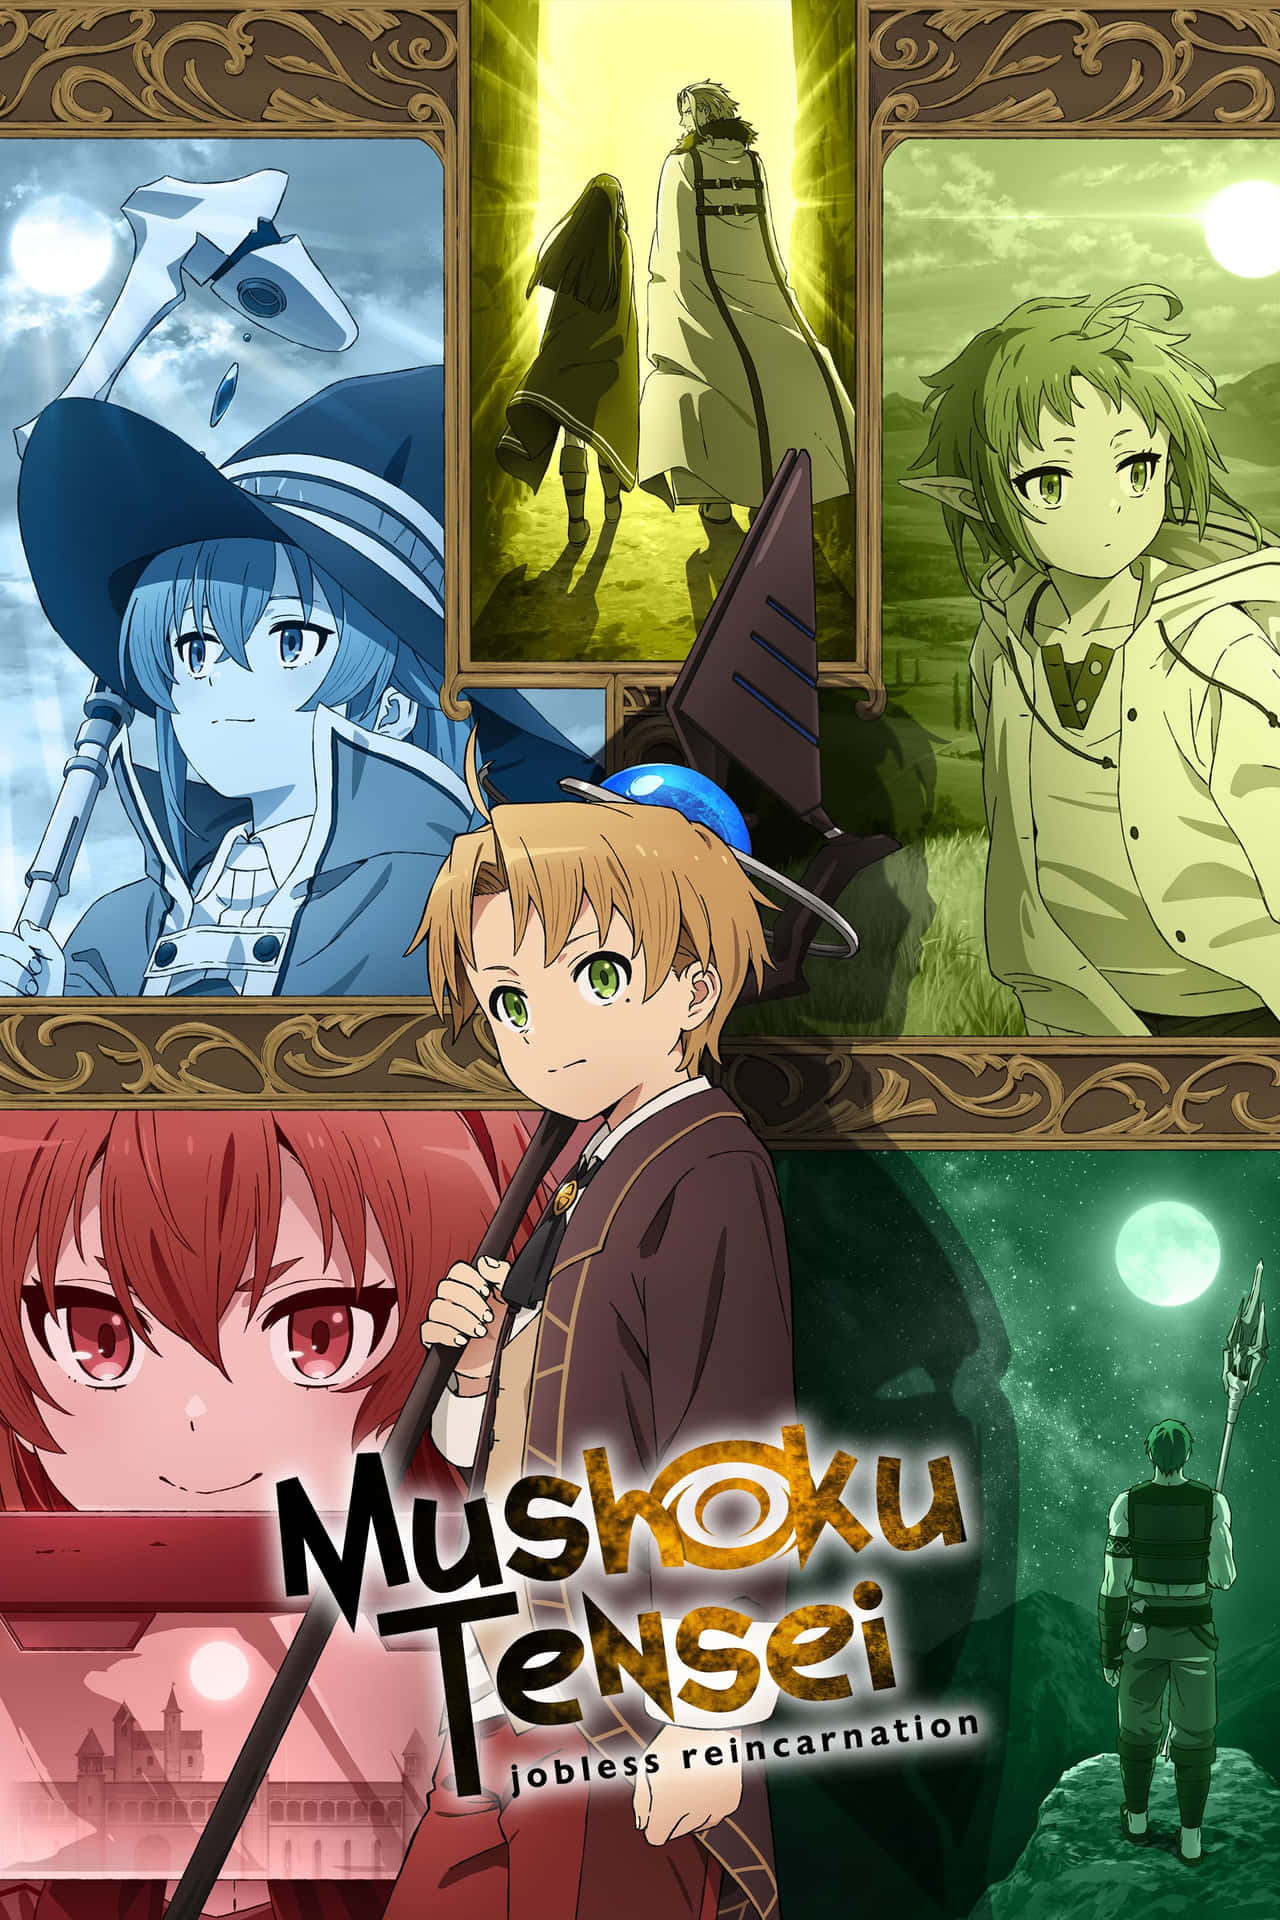 A Still Image of The Anime 'Mushoku Tensei'